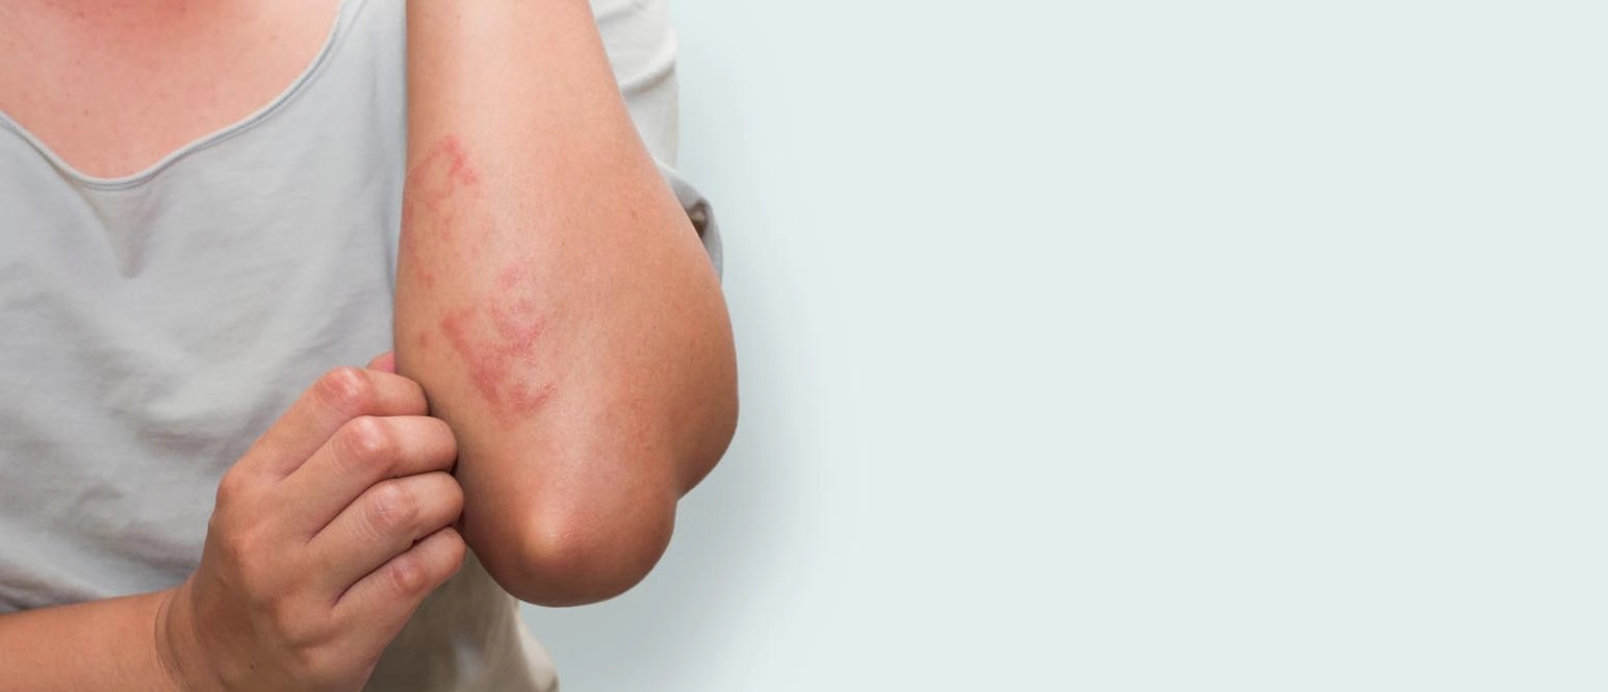 Woman scratching arm with Eczema